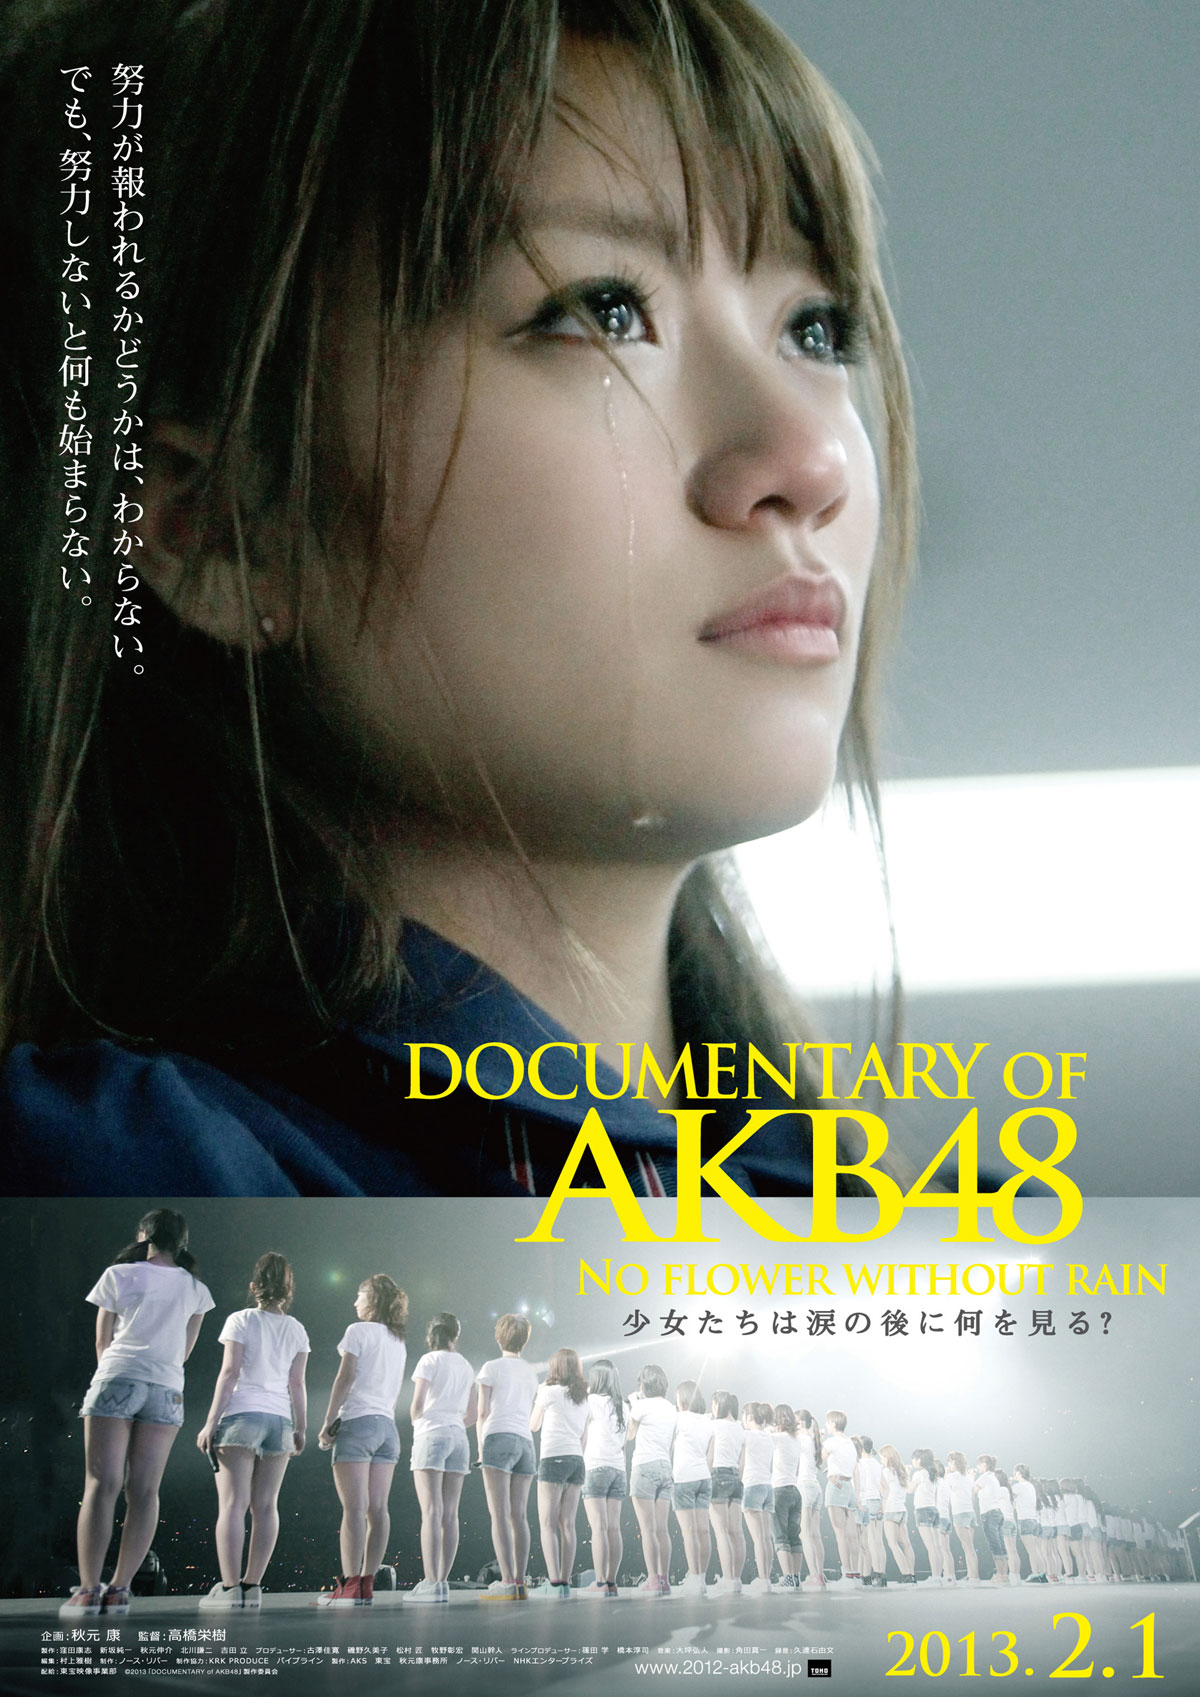 DOCUMENTARY OF AKB48　NO FLOWER WITHOUT RAIN 少女たちは涙の後に何を見る？の画像